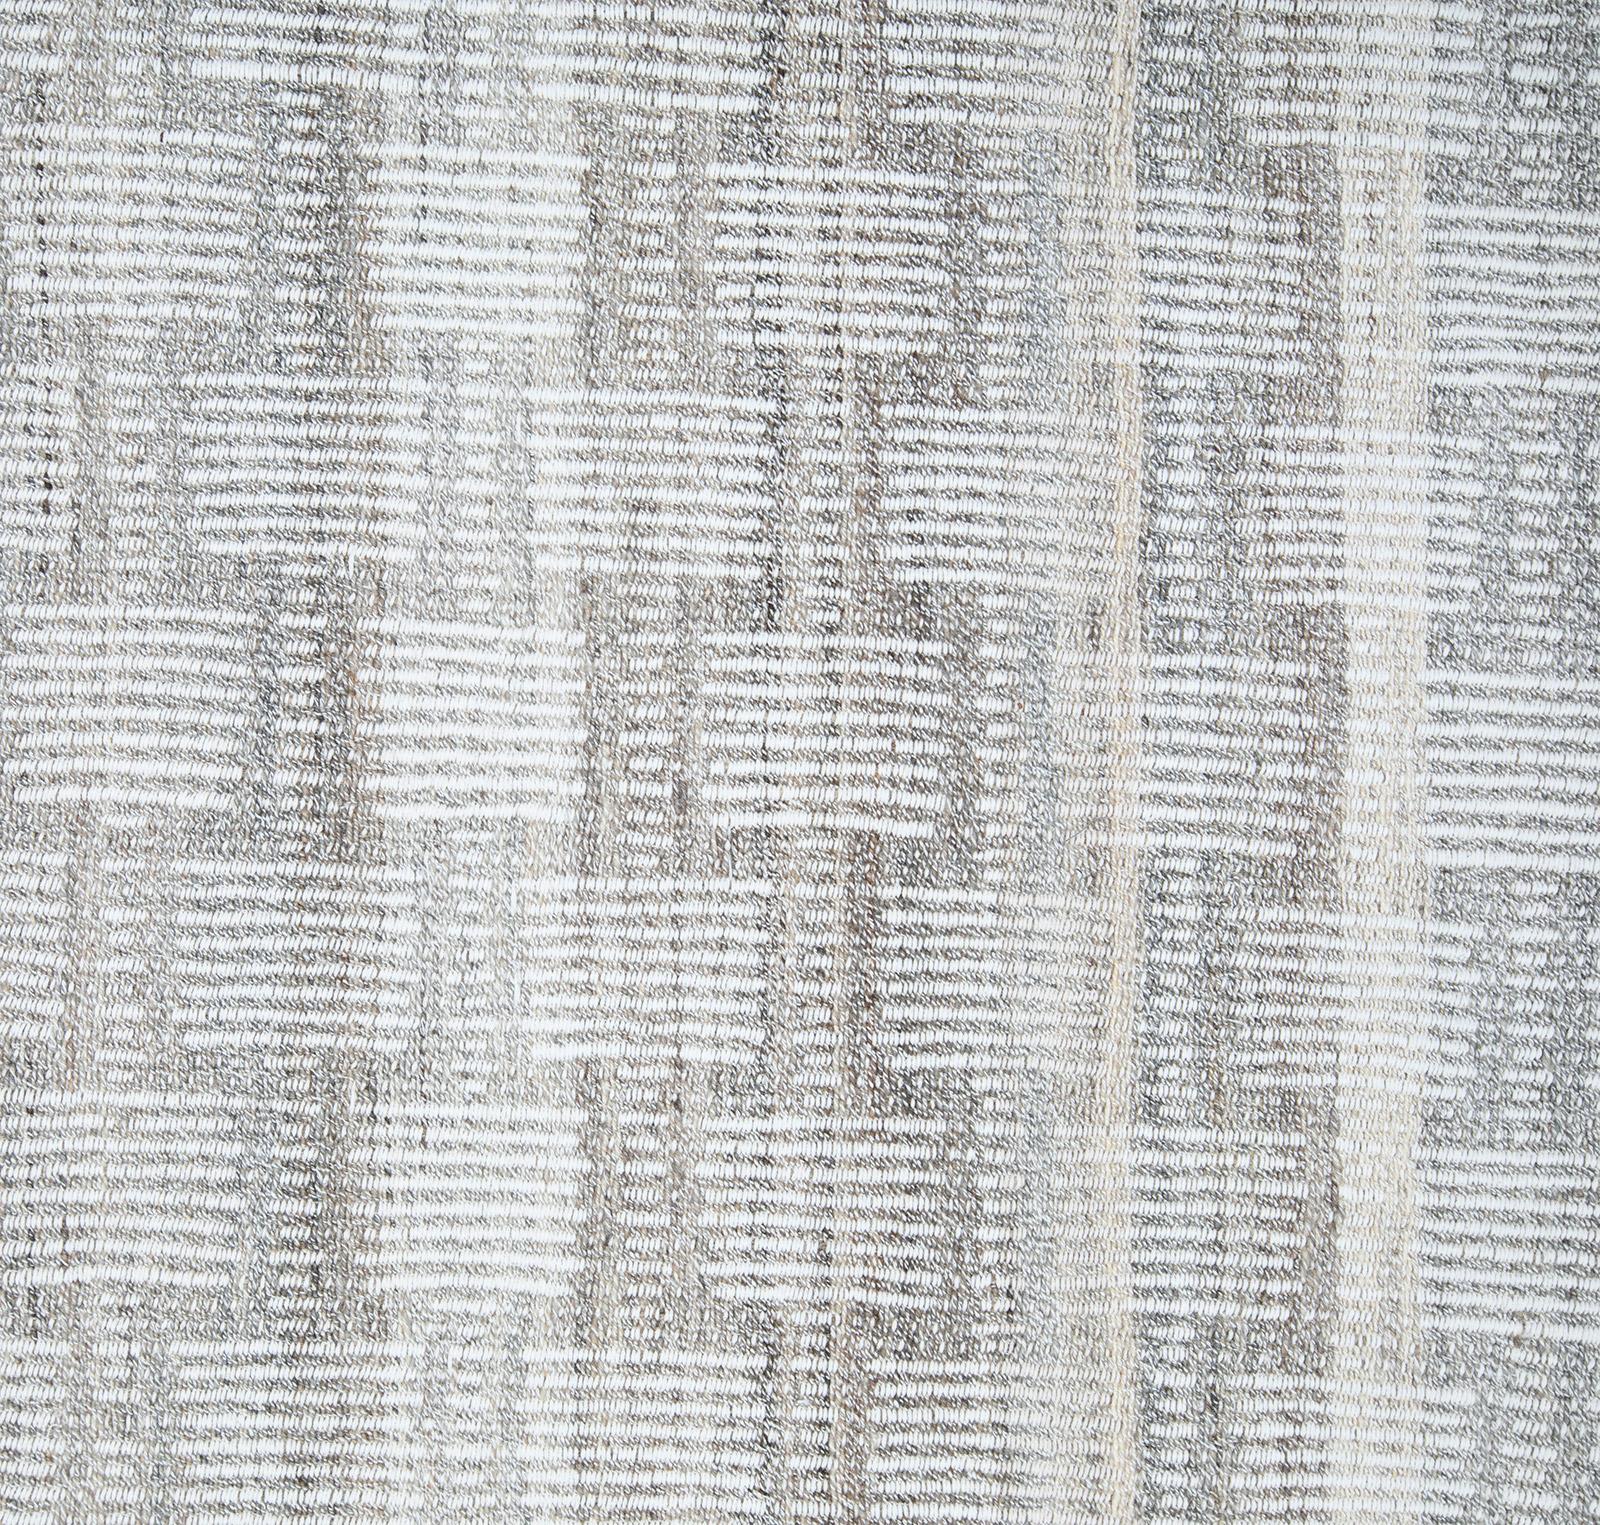 Afghan Modern Decorative Flatweave Textured Rug in Natural Tones For Sale